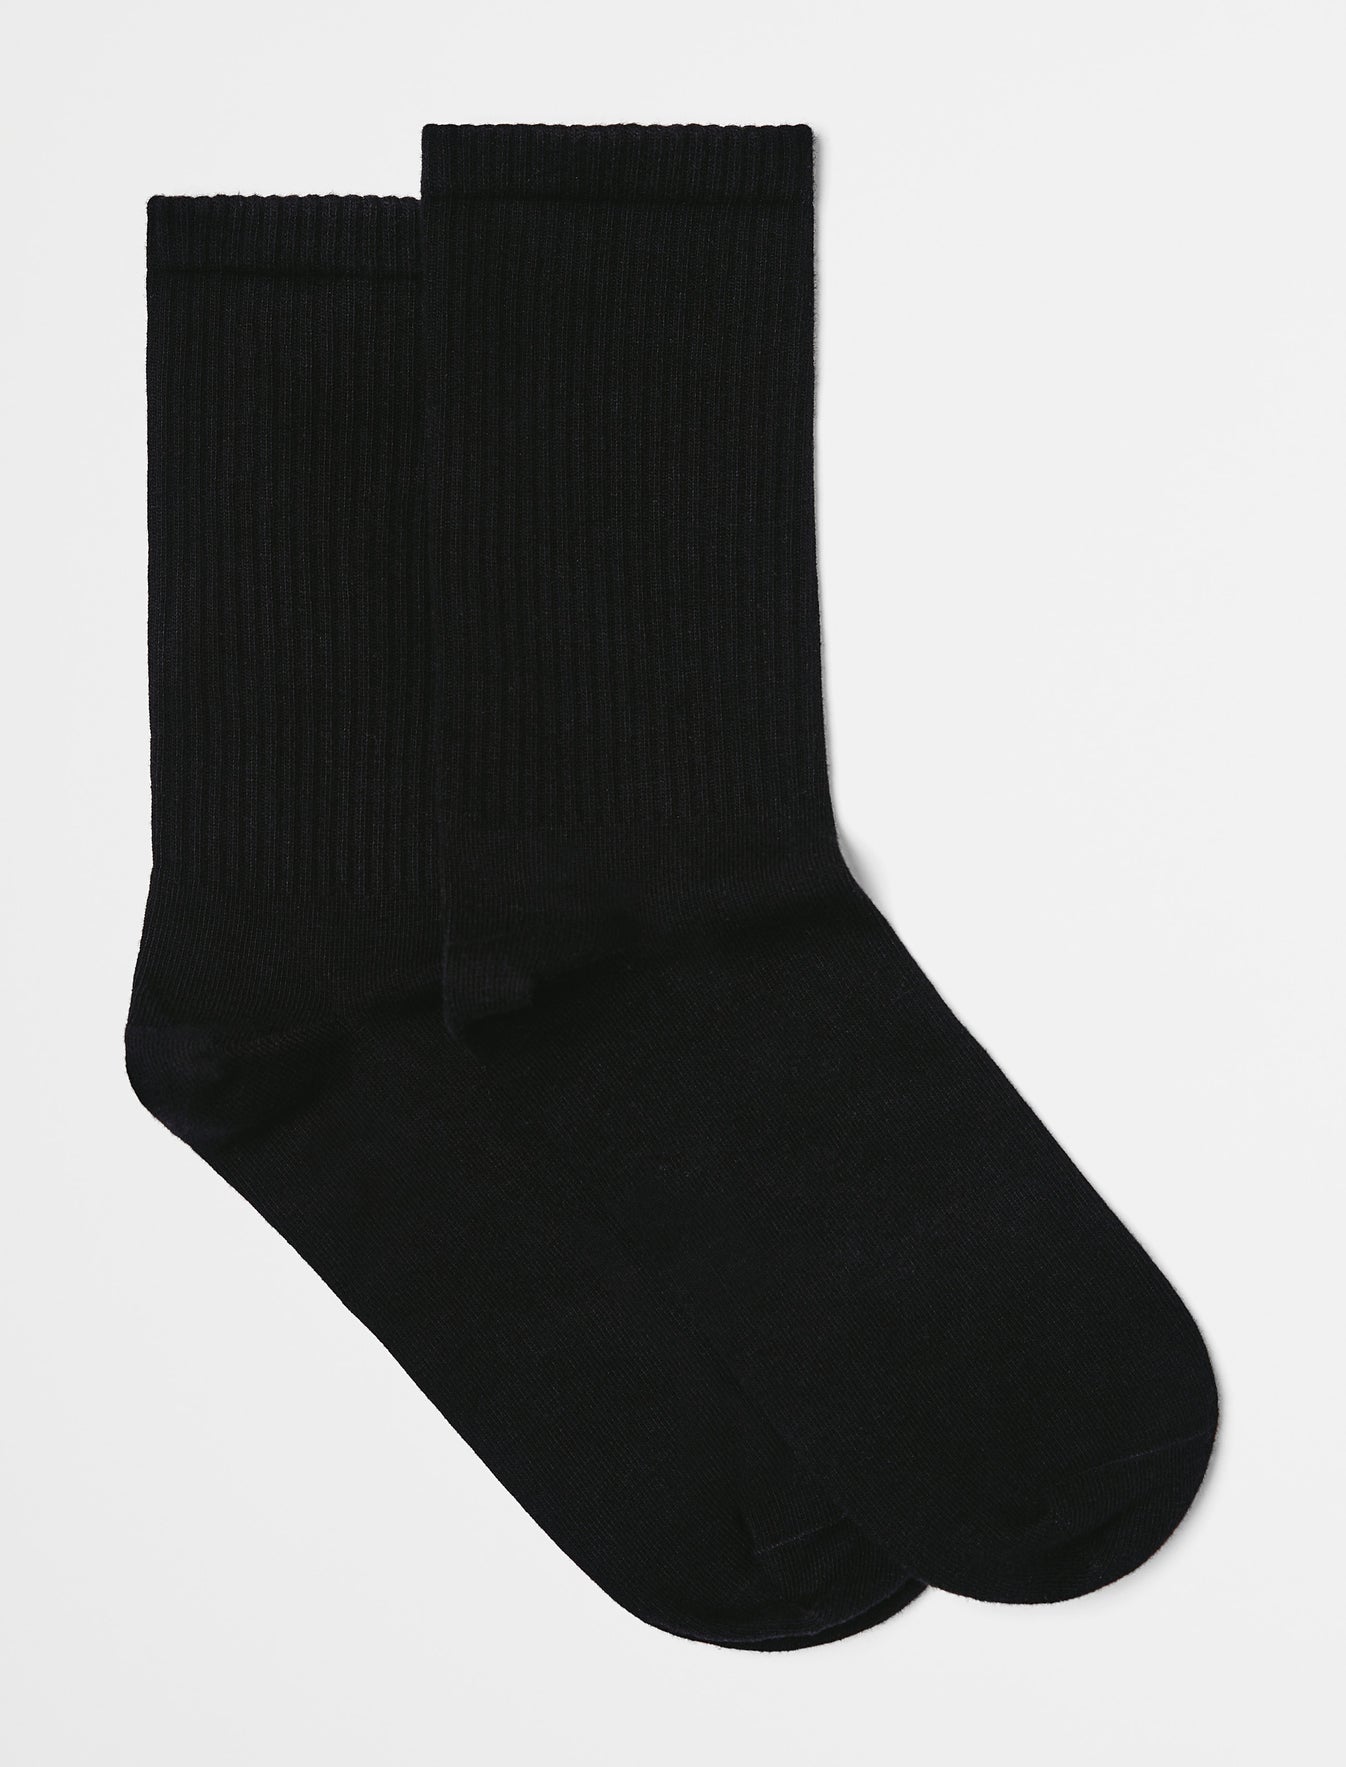 Ryland Sock True Black Socks Unisex Accessory Photo 2